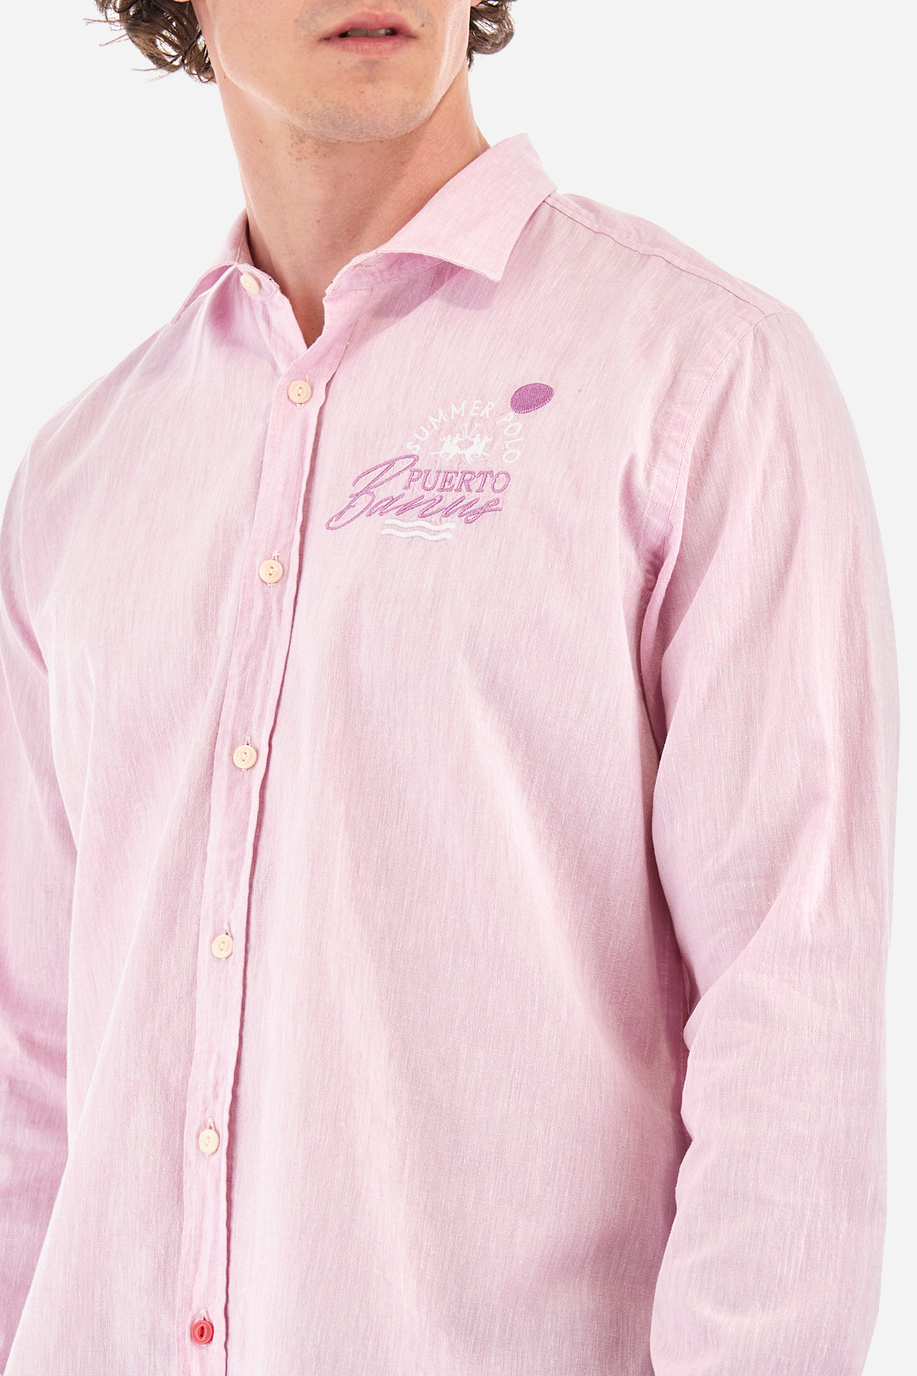 Regular-fit shirt in cotton and linen - Innocent - Shirts | La Martina - Official Online Shop